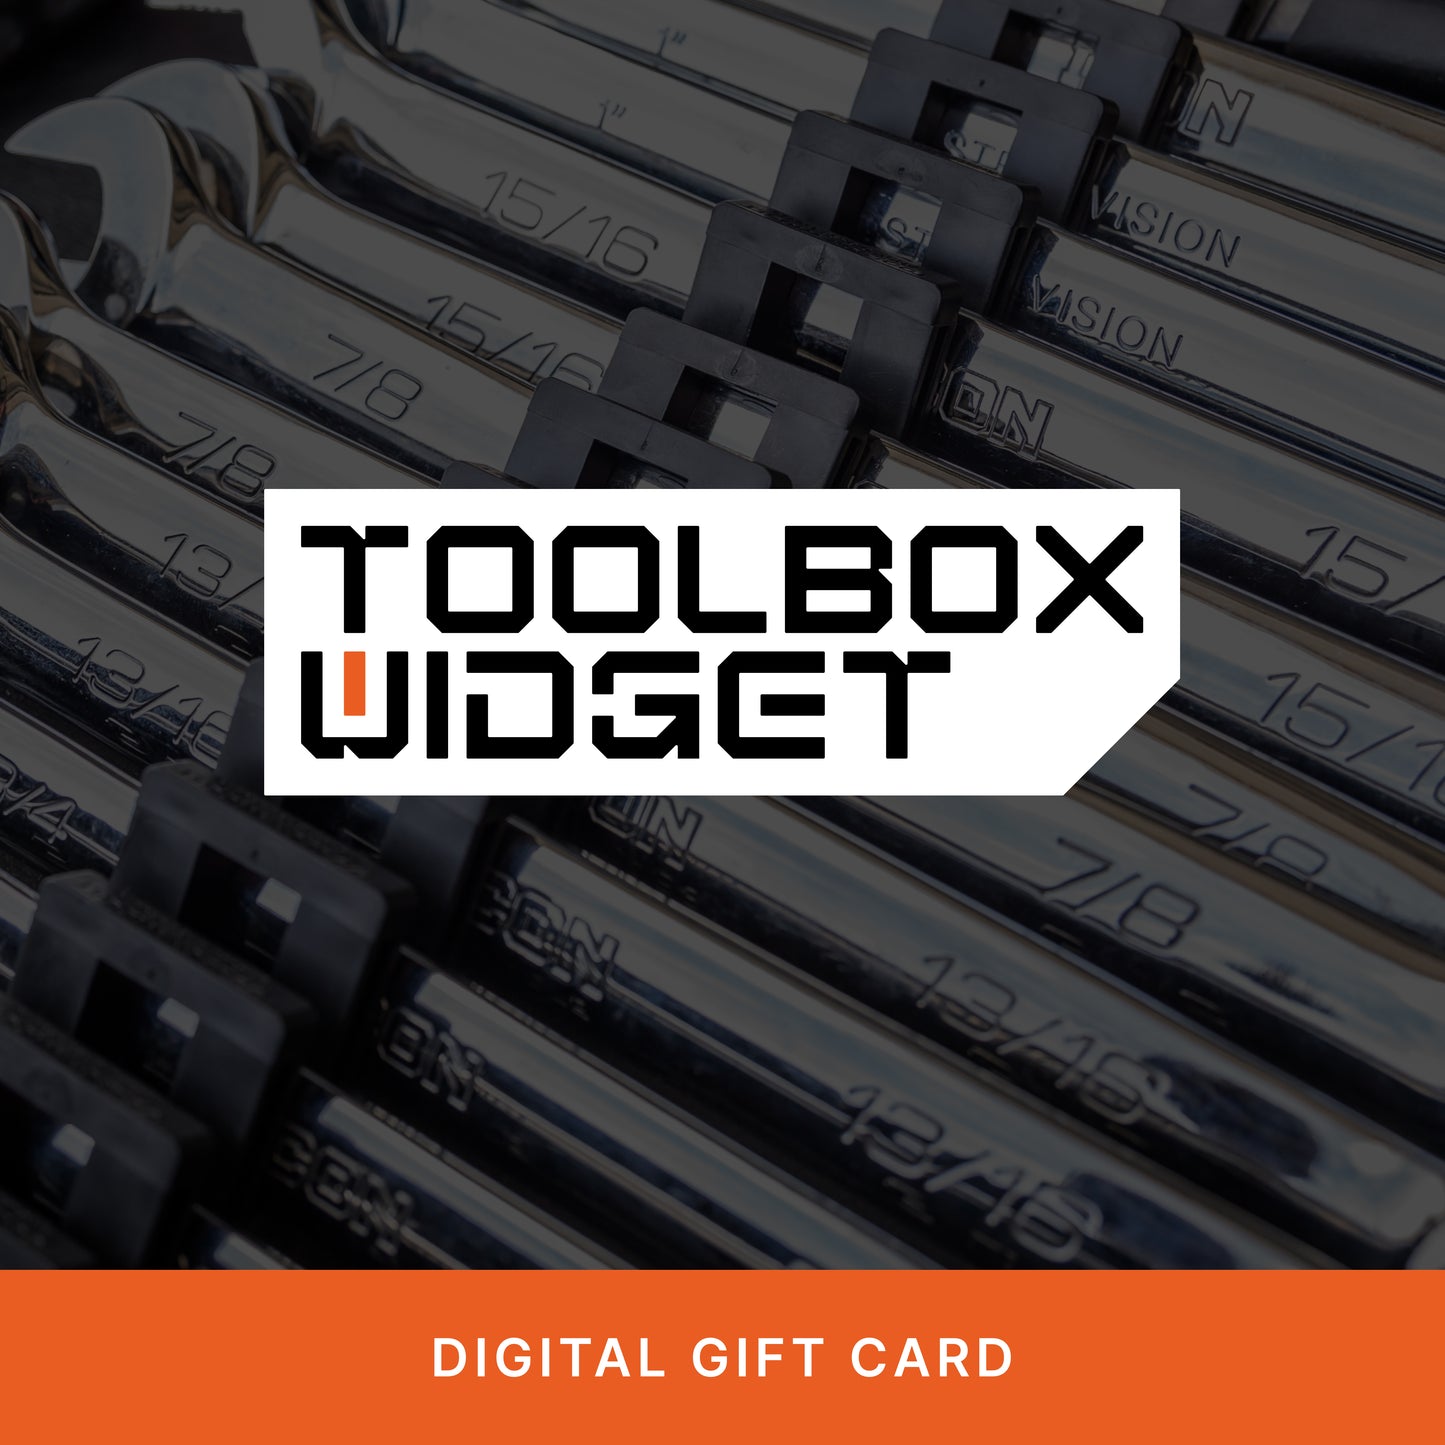 Toolbox Widget Digital Gift Card